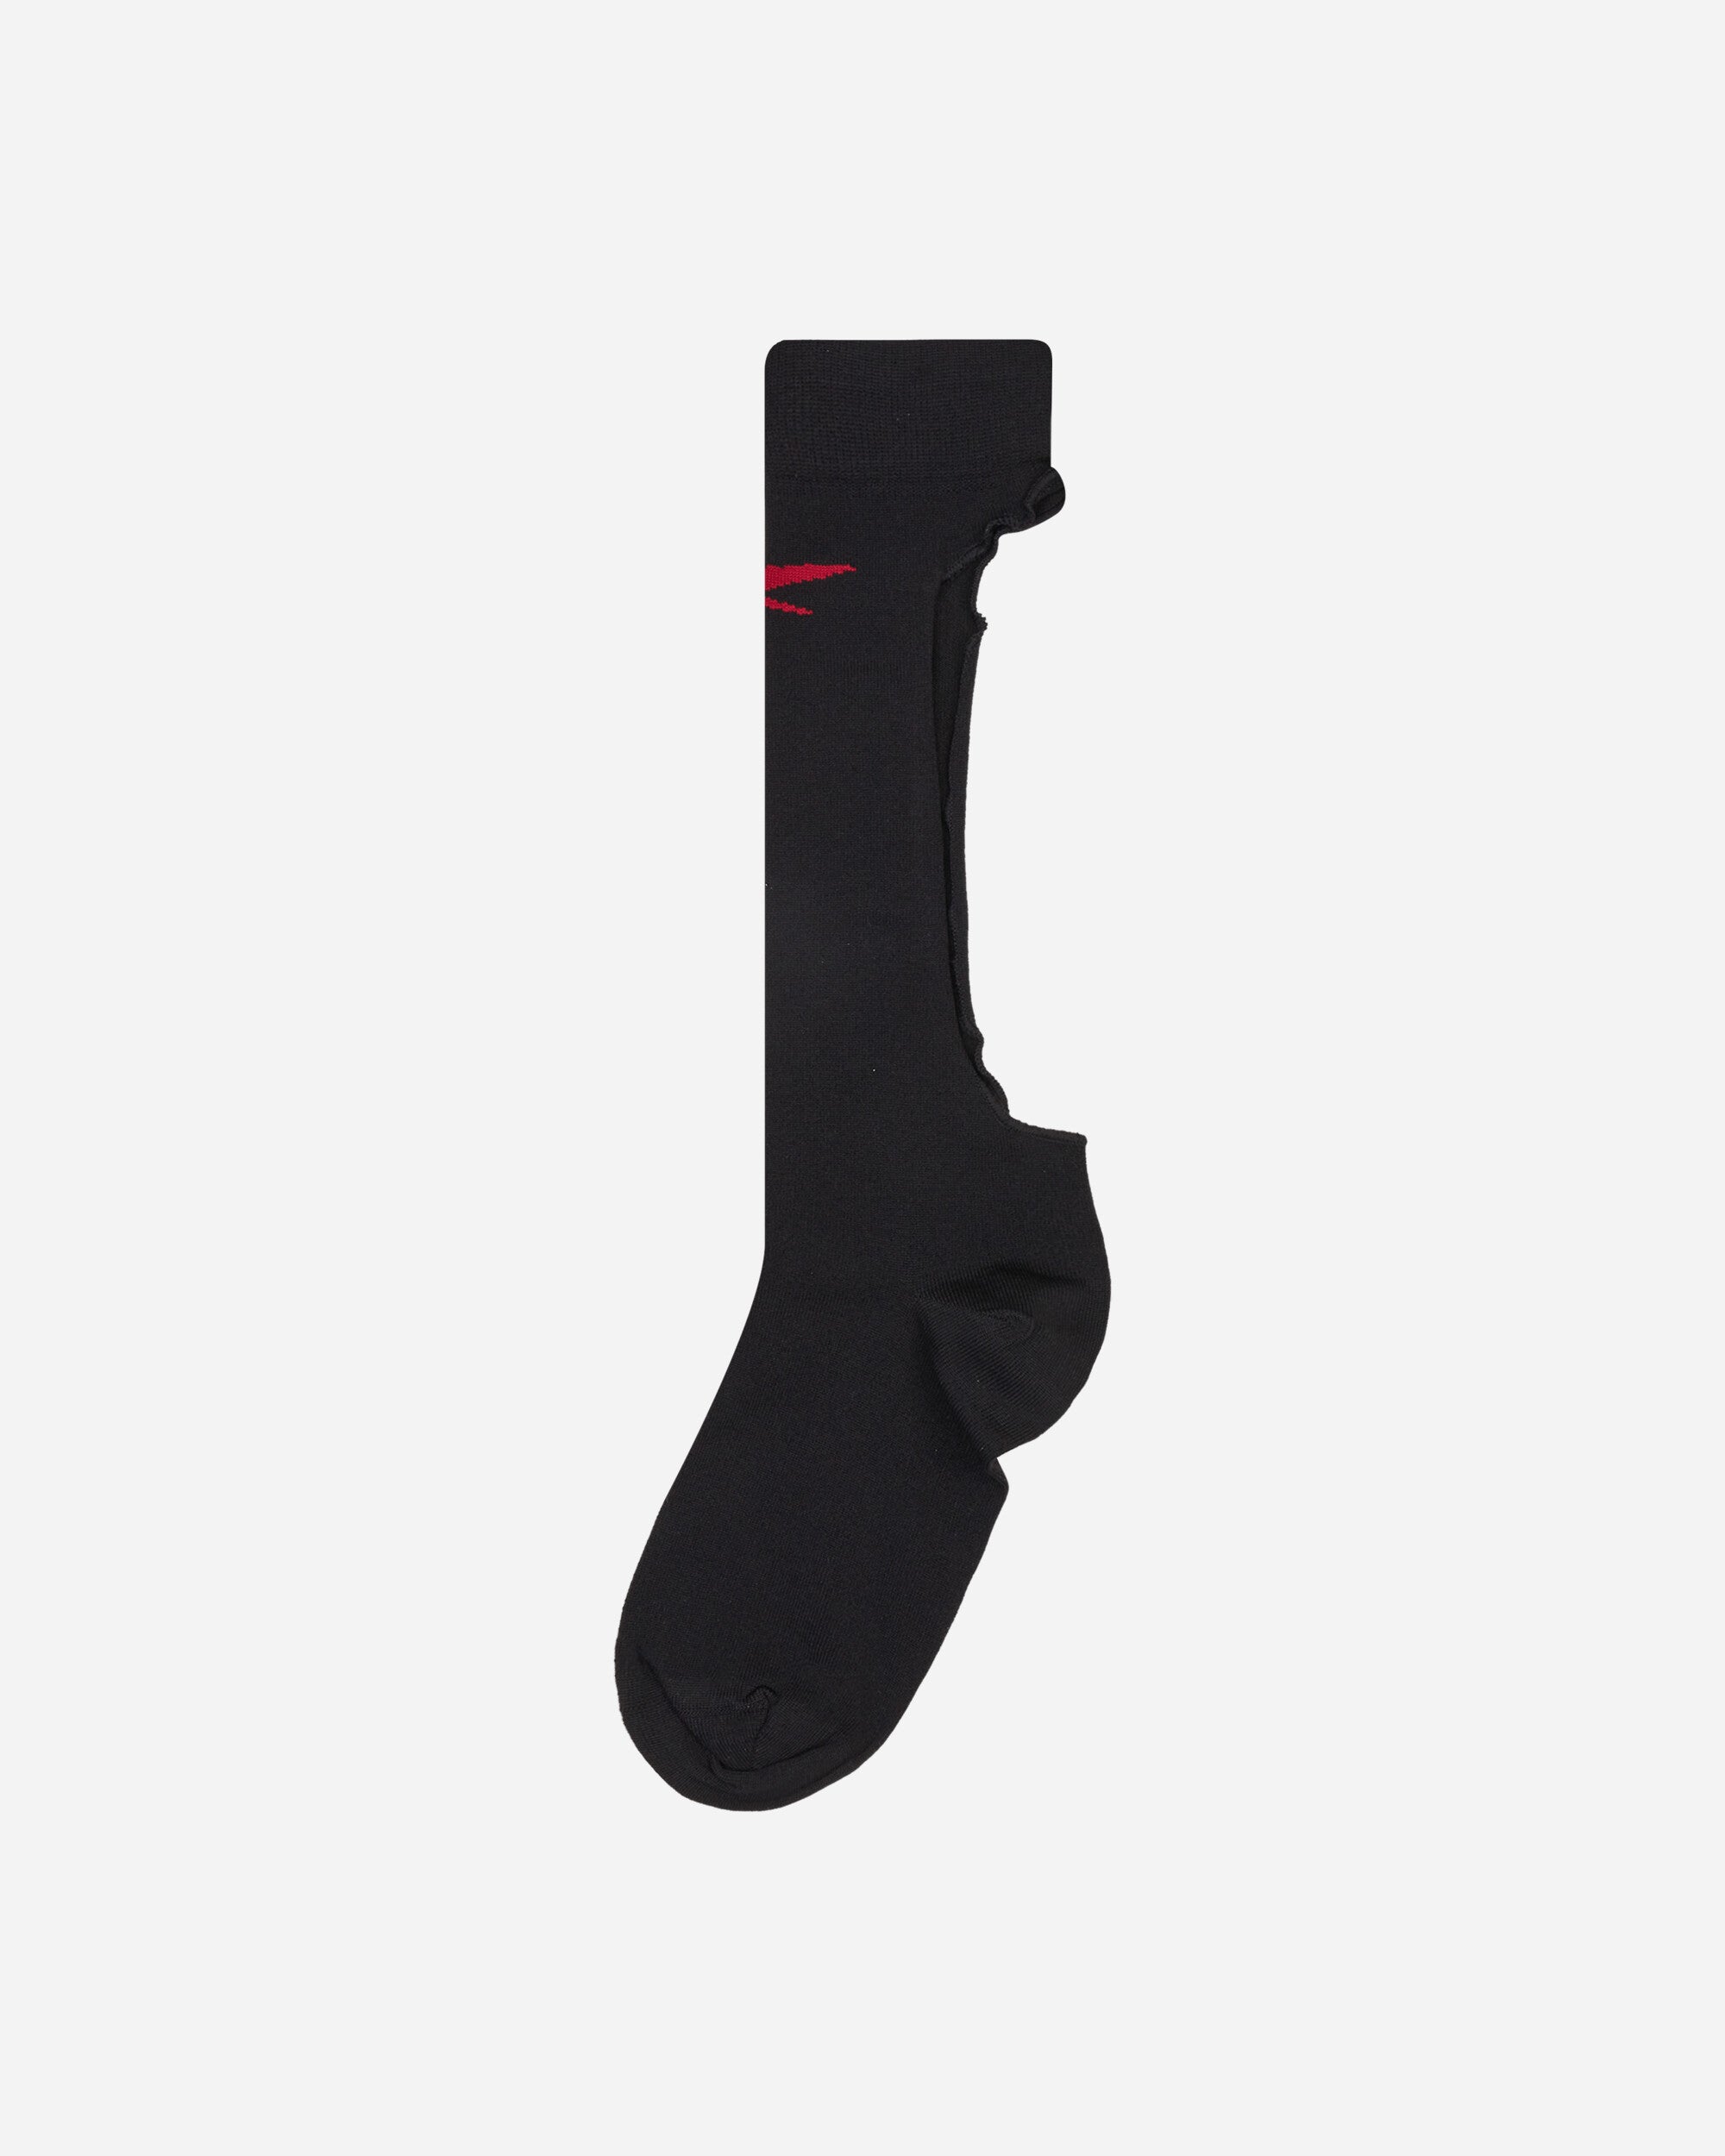 Machine-A Drilled Socks Black